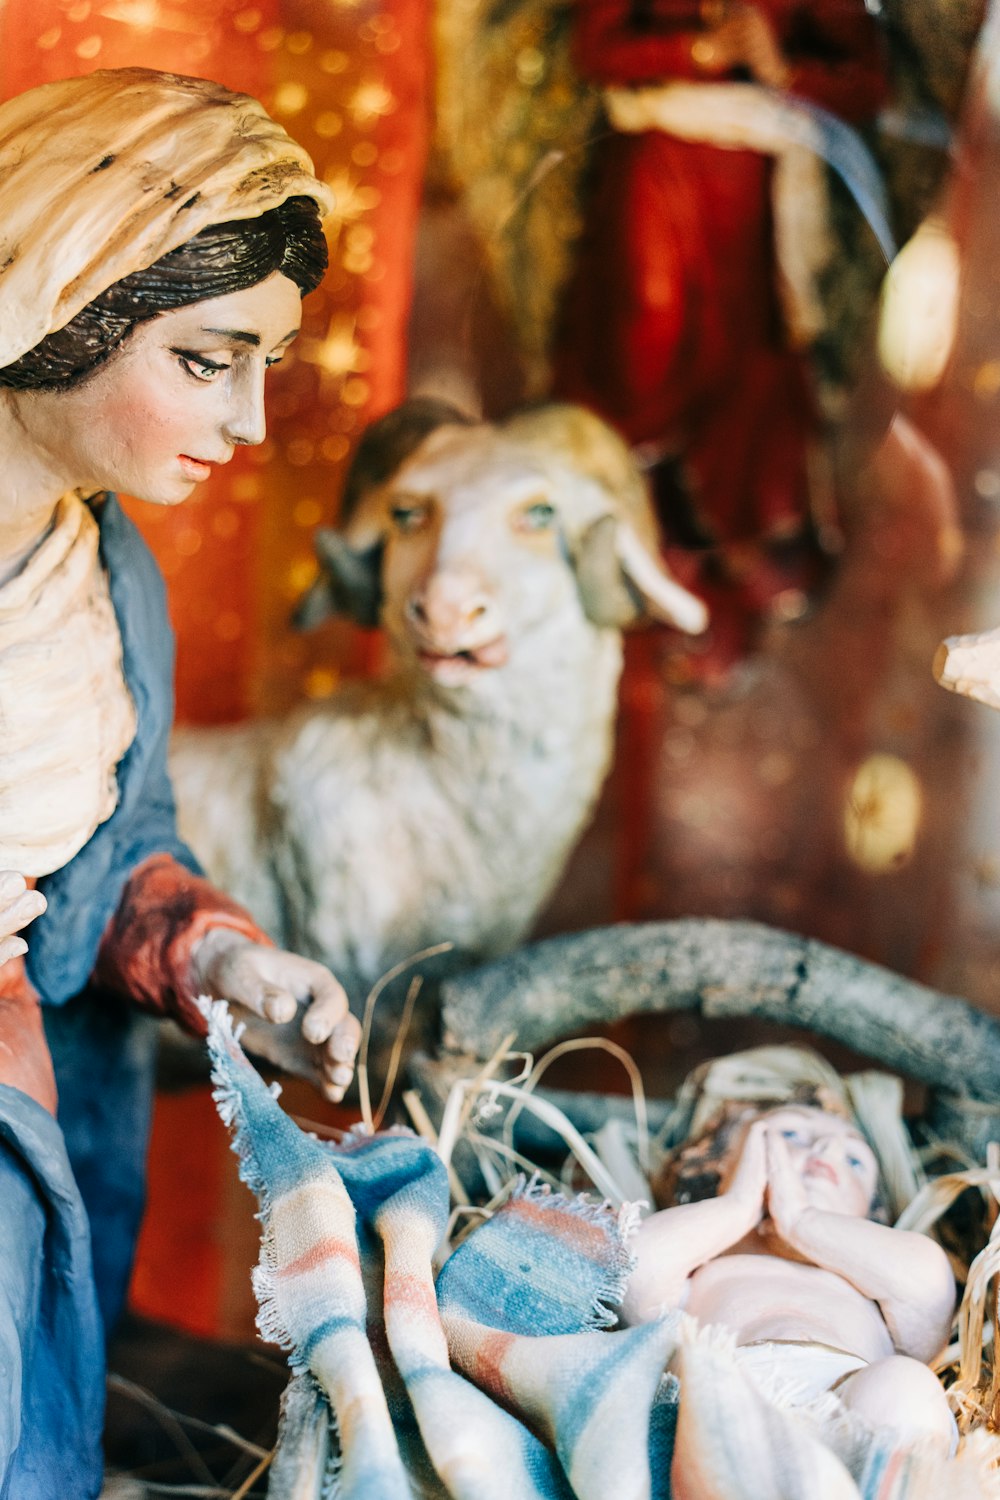 a nativity scene of a baby jesus in a manger scene